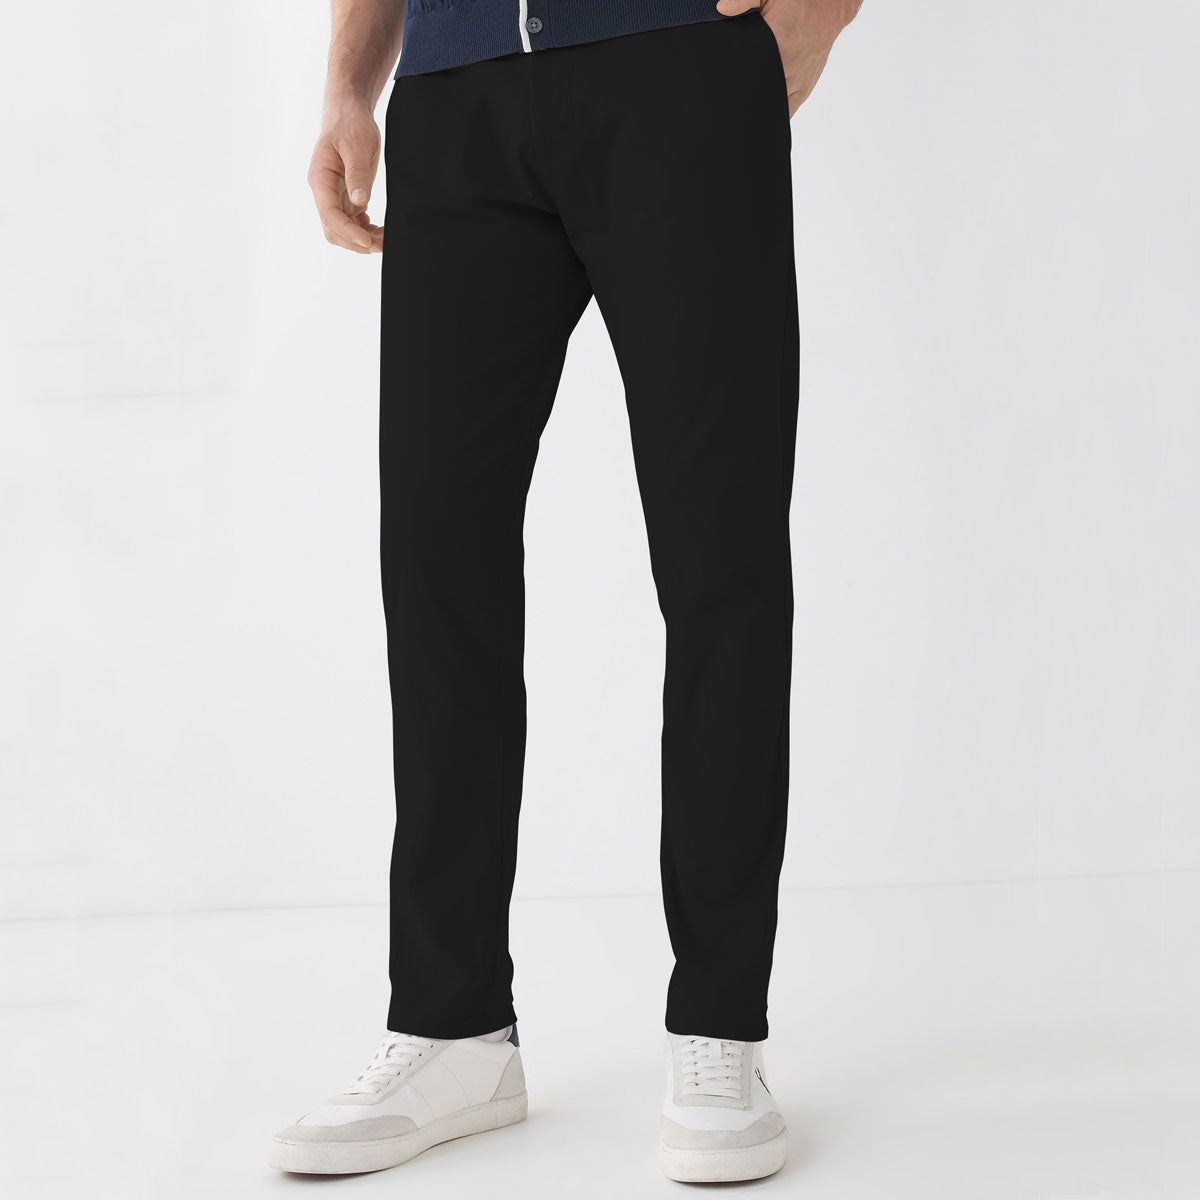 Branded Jet Black Narrow Cotton Pant, Hangree